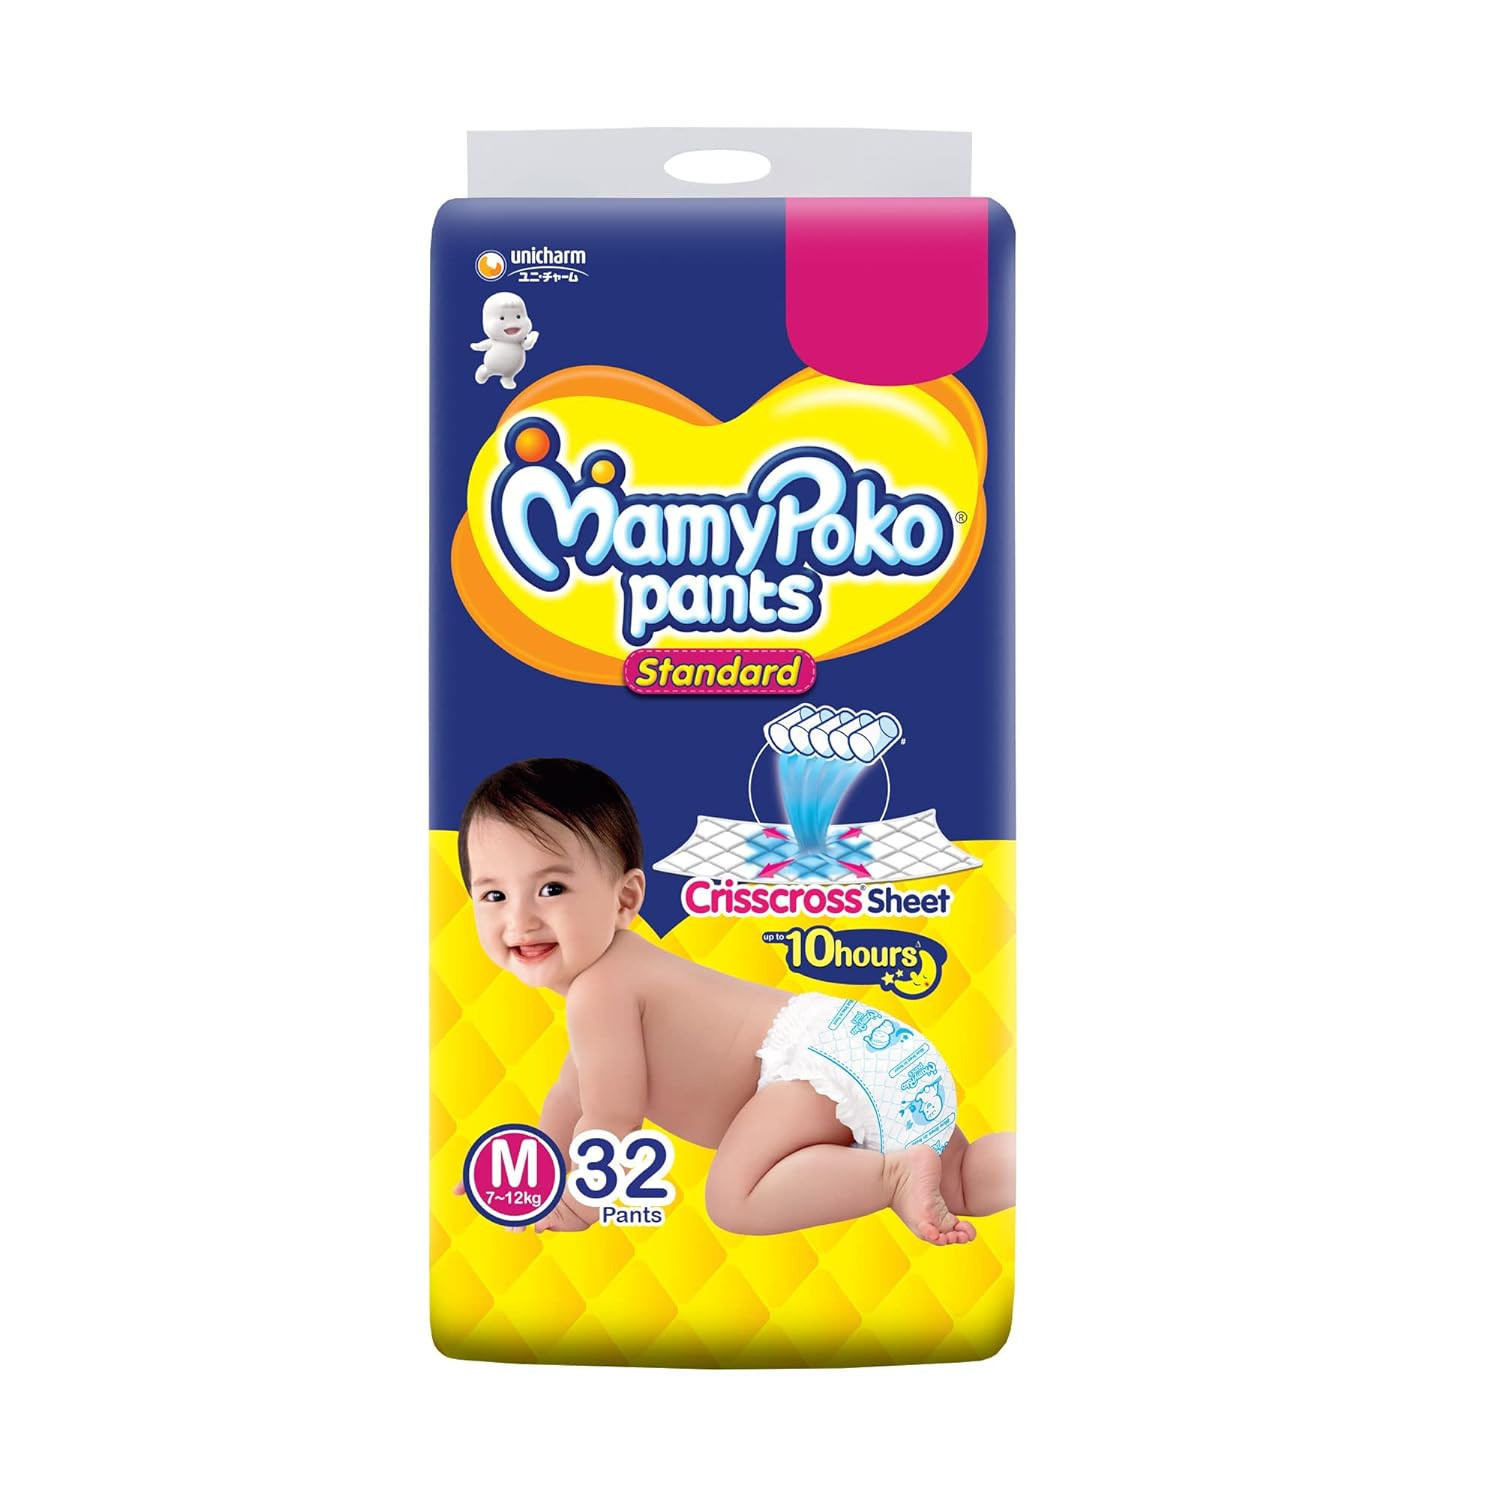 MamyPoko Pants Standard Baby Diapers, Medium (M), 32 Count, 7-12 kg